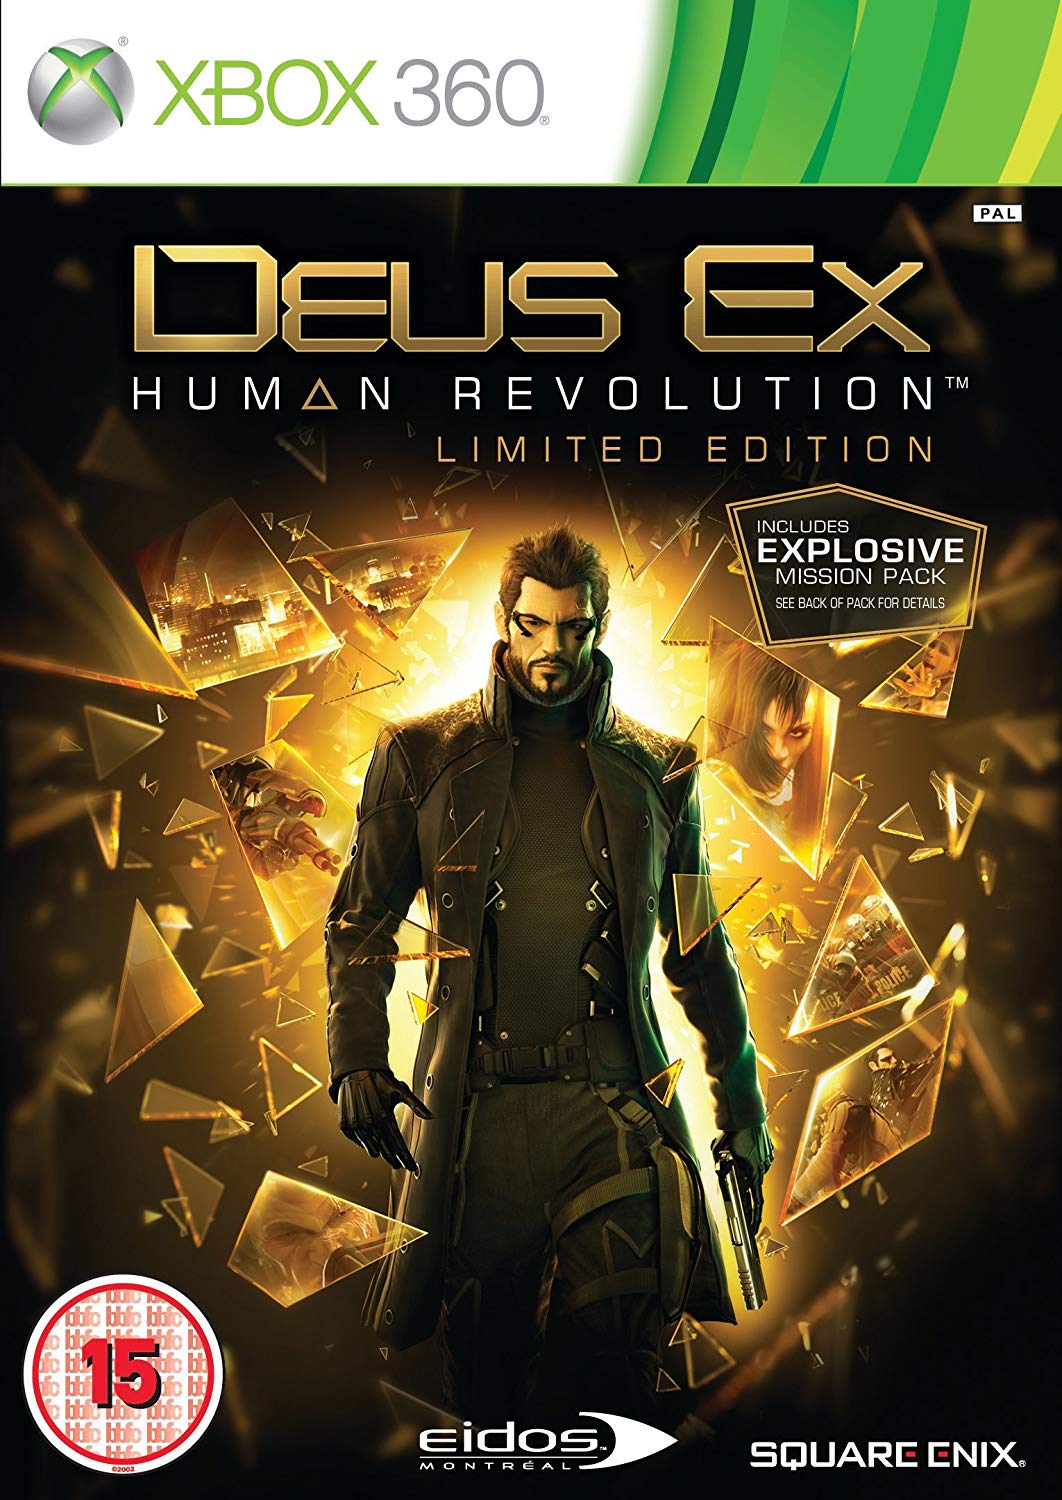 Deus Ex Human Revolution Limited Edition (német doboz) - Xbox 360 Játékok